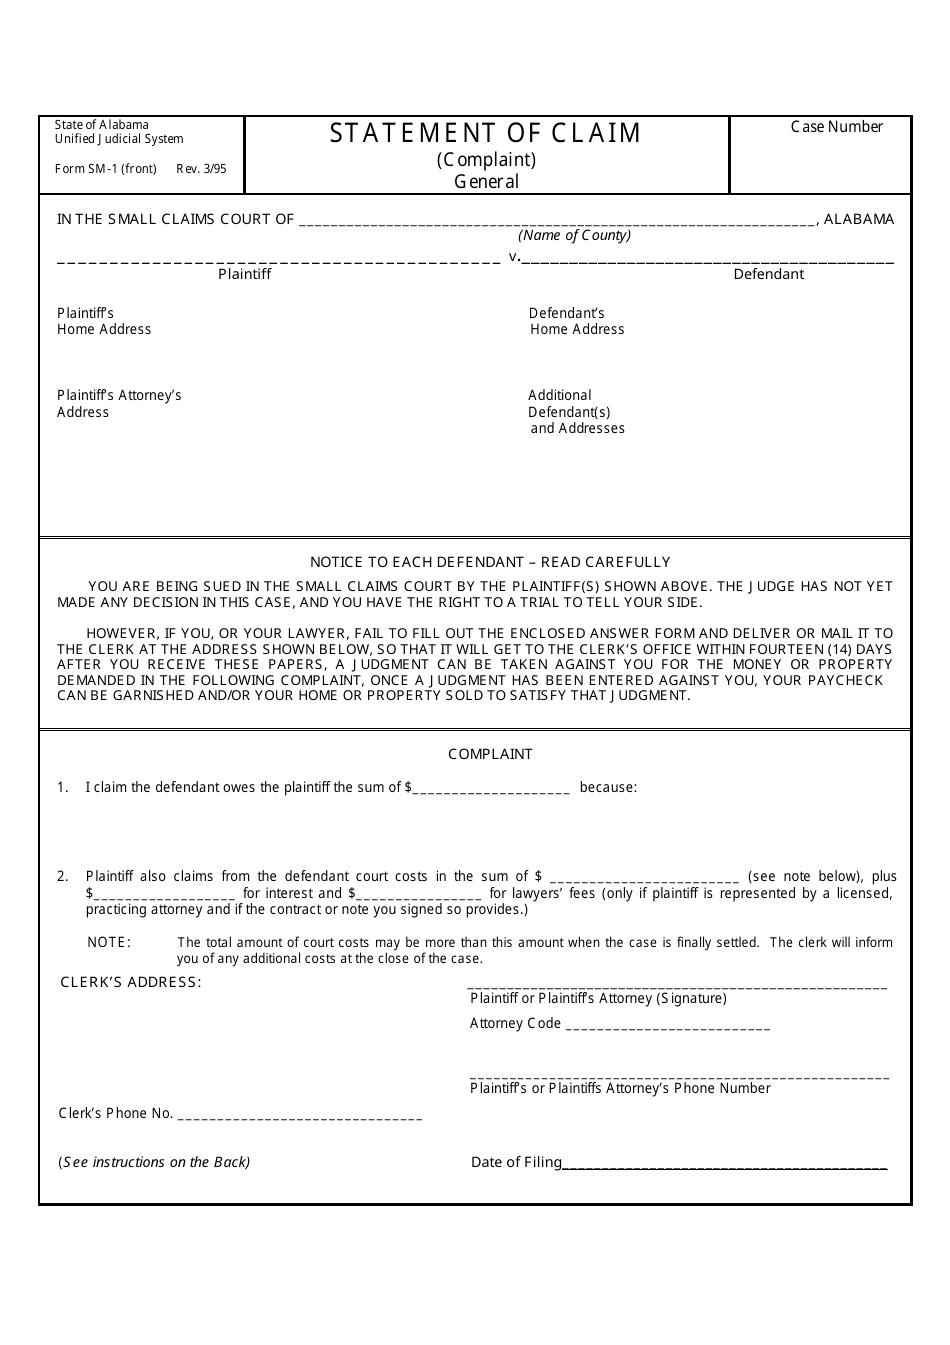 Form SM-1 Statement of Claim (Complaint) - Alabama, Page 1